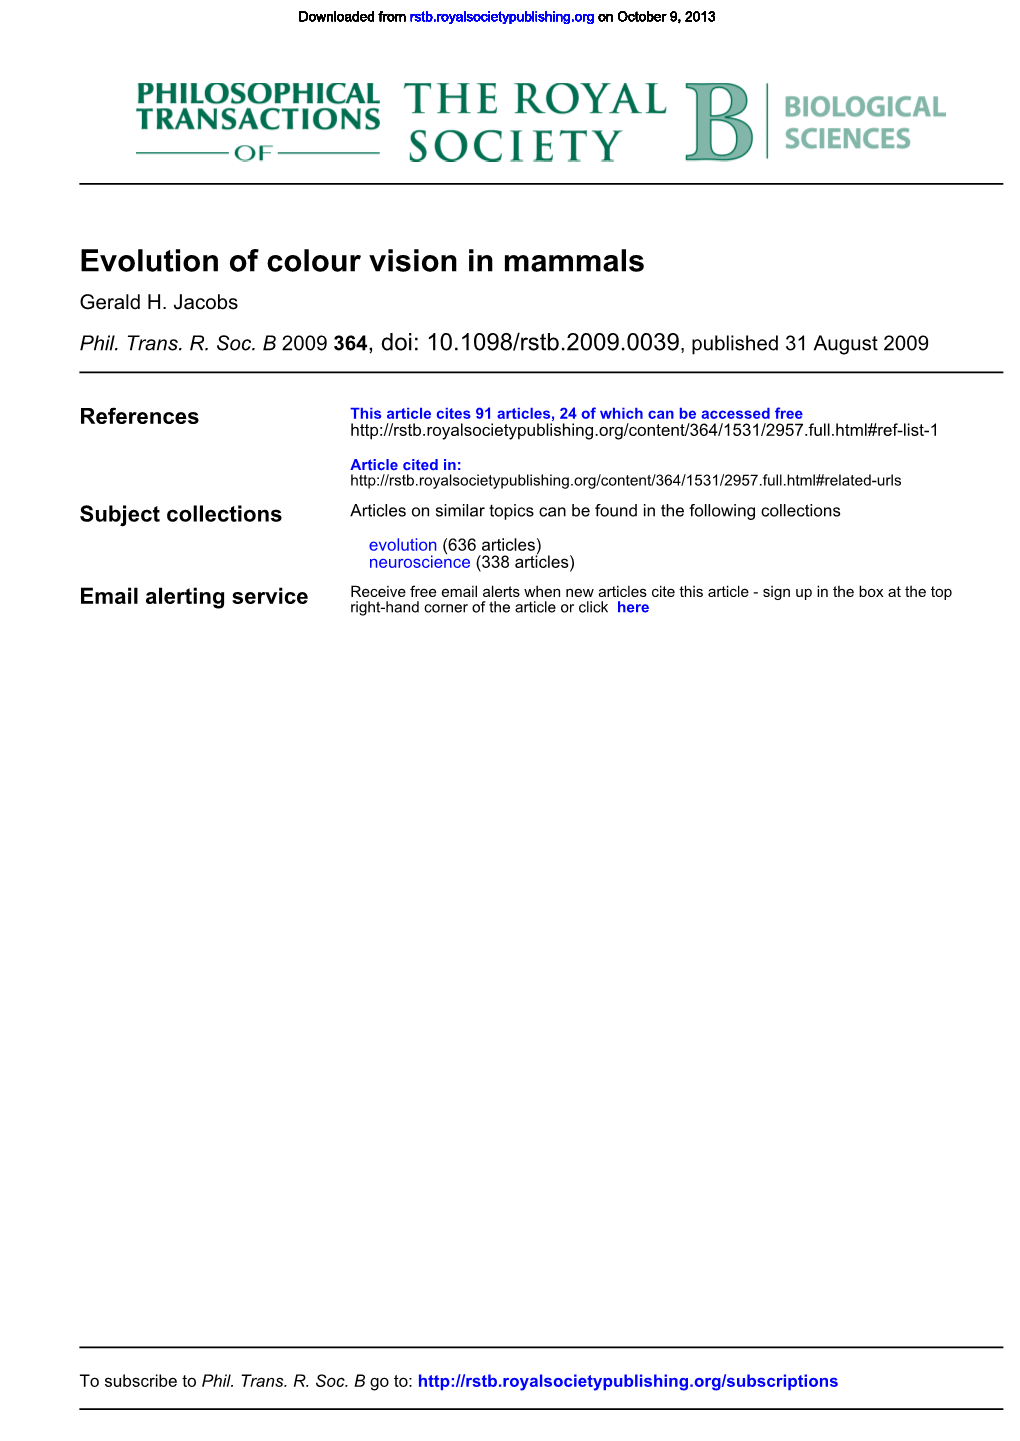 Evolution of Colour Vision in Mammals